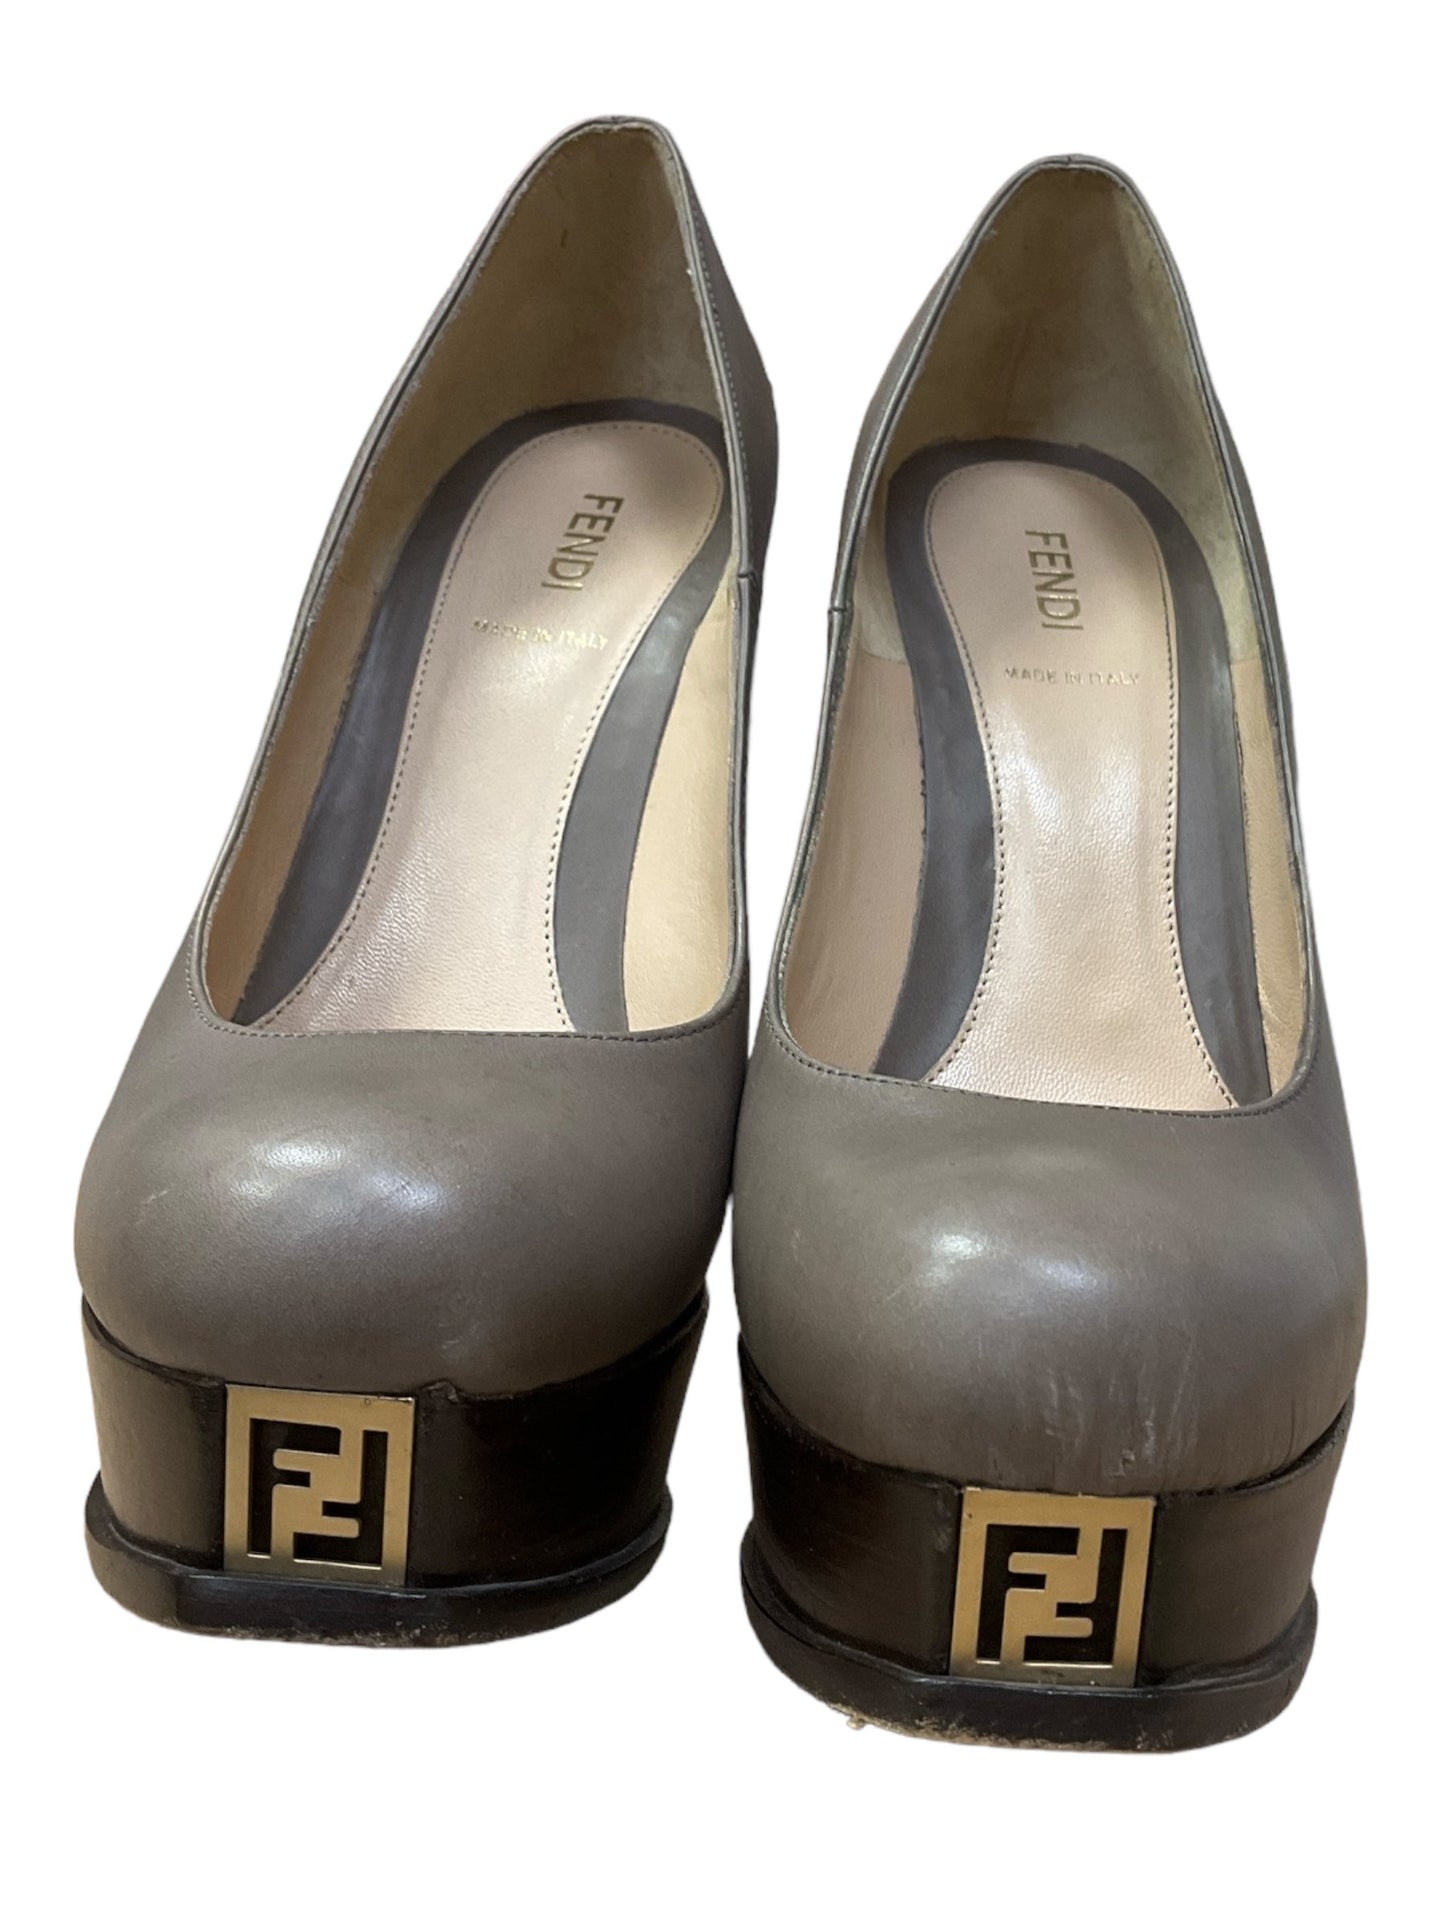 Brown Shoes Heels Stiletto Fendi, Size 9